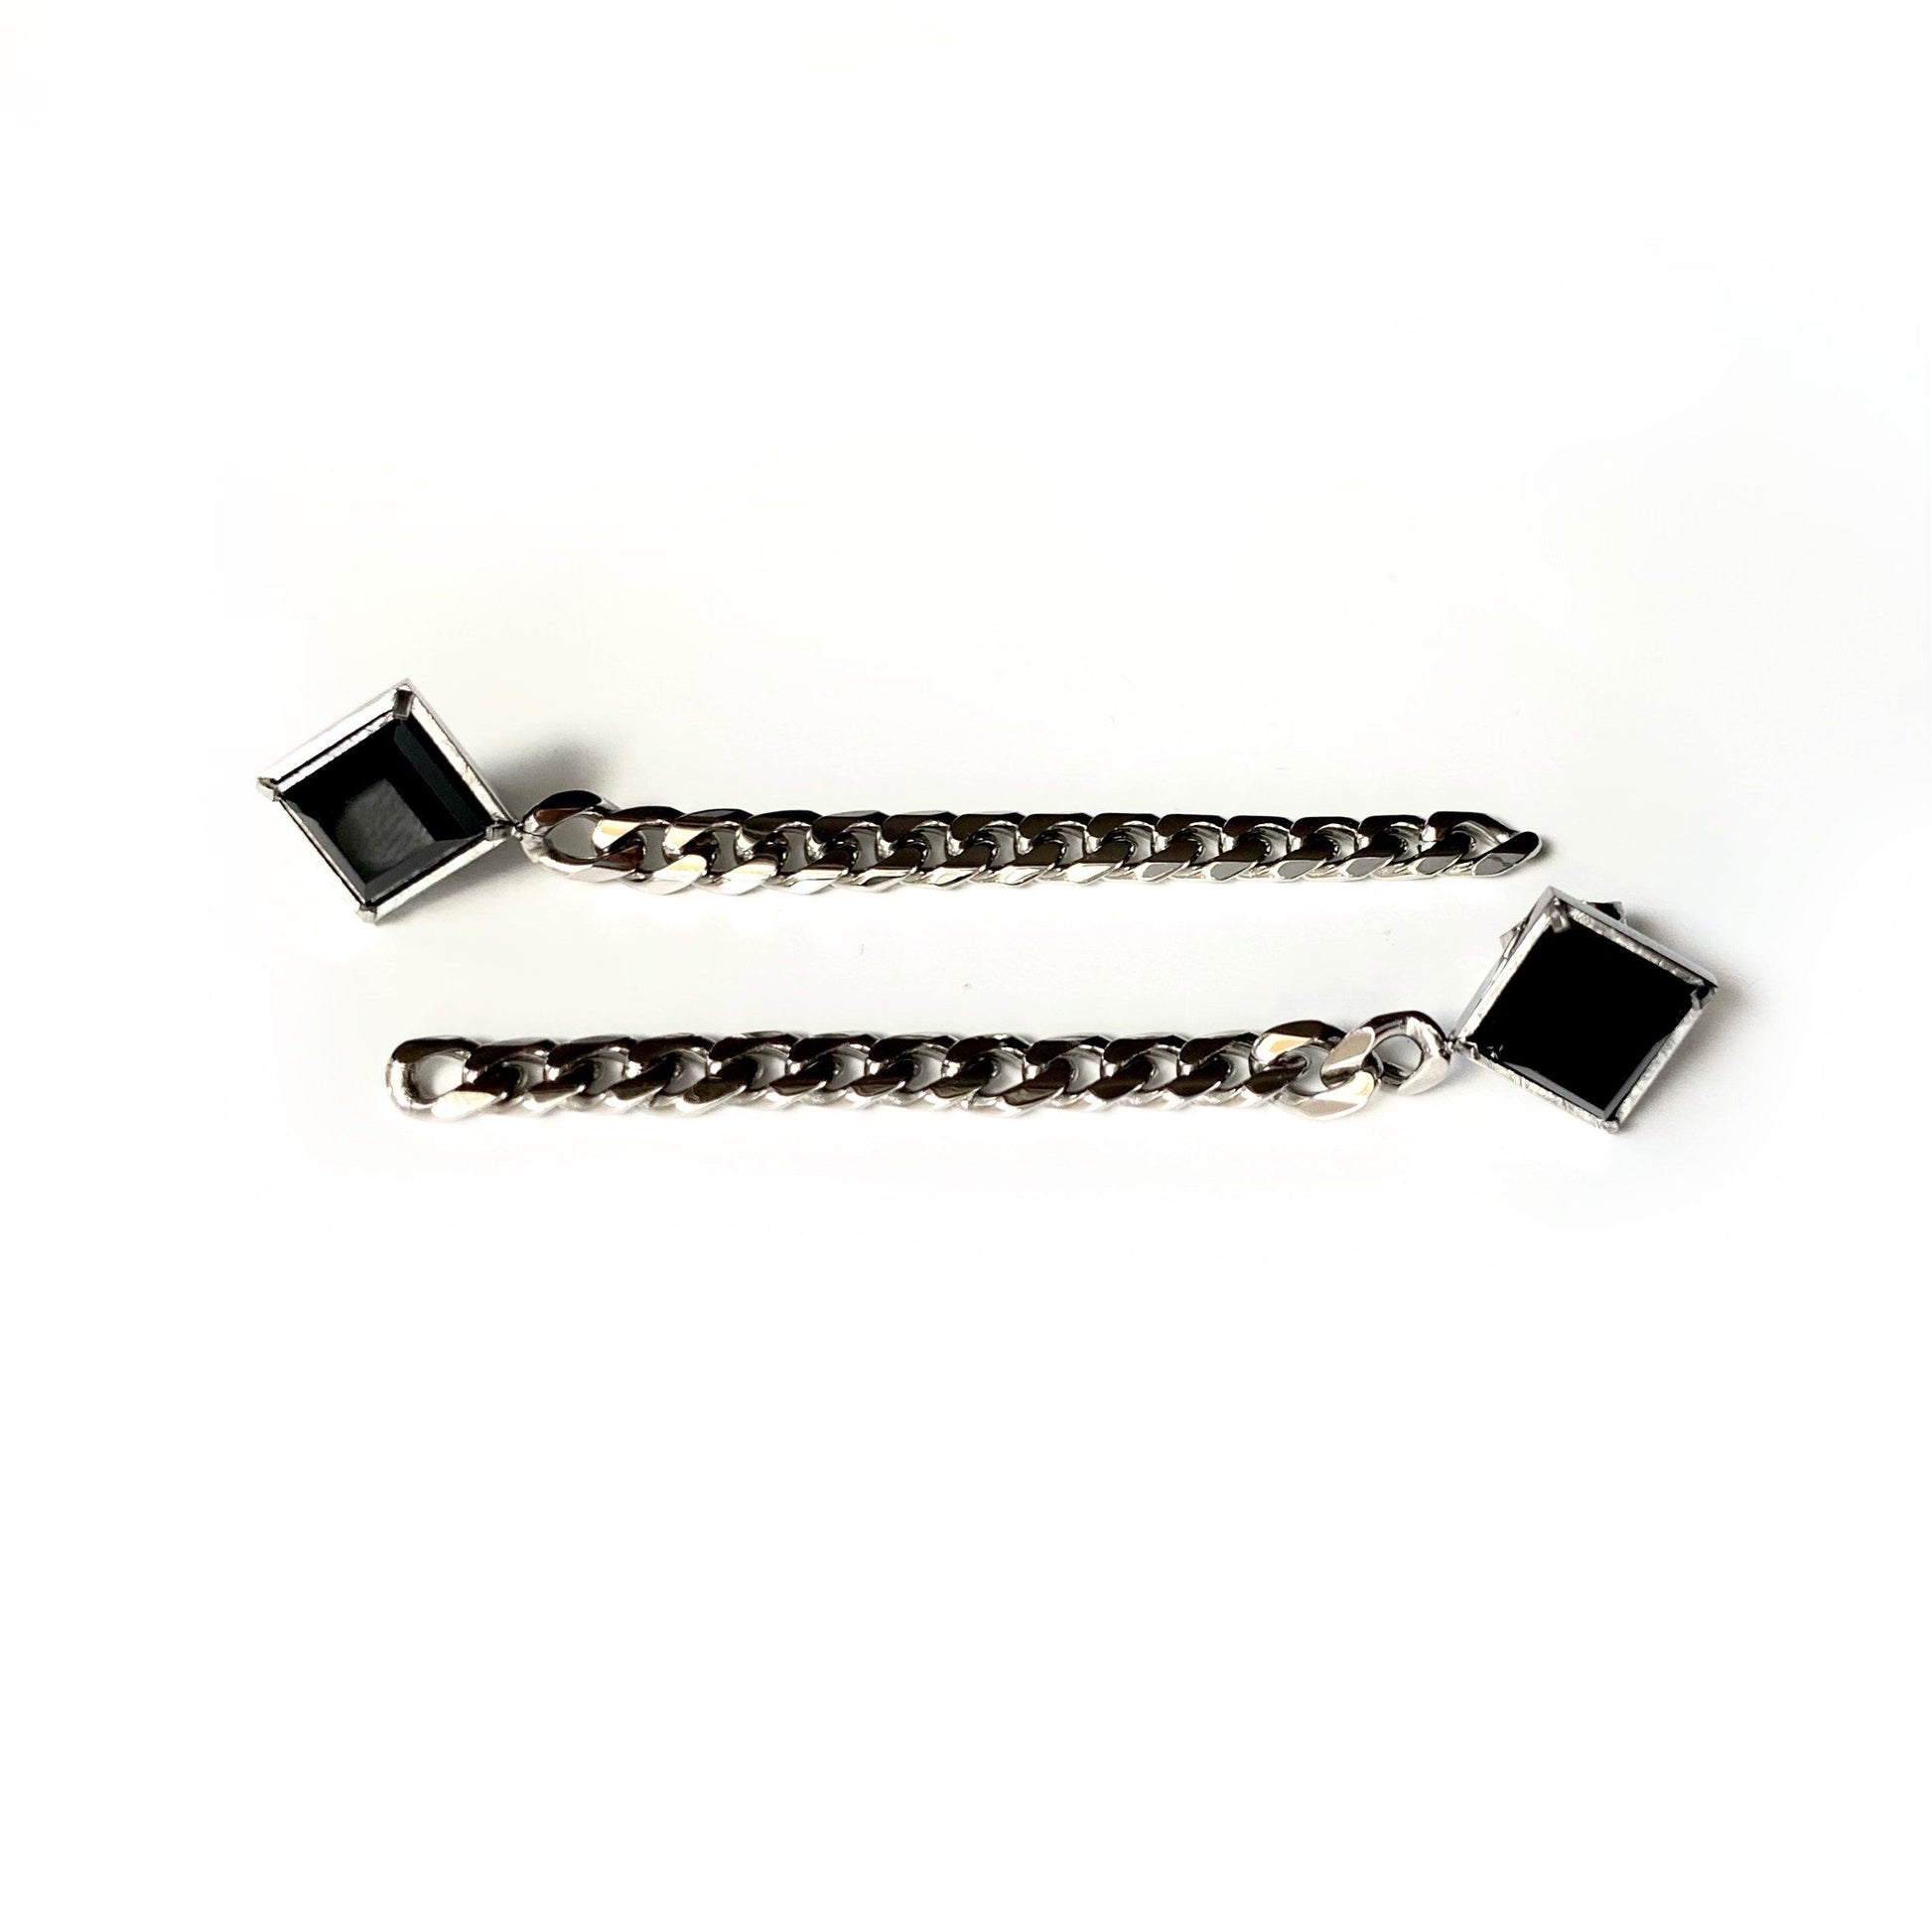 Earrings - Cuban Chain Earrings With Black Agate |  Cuban Chain Link Chain